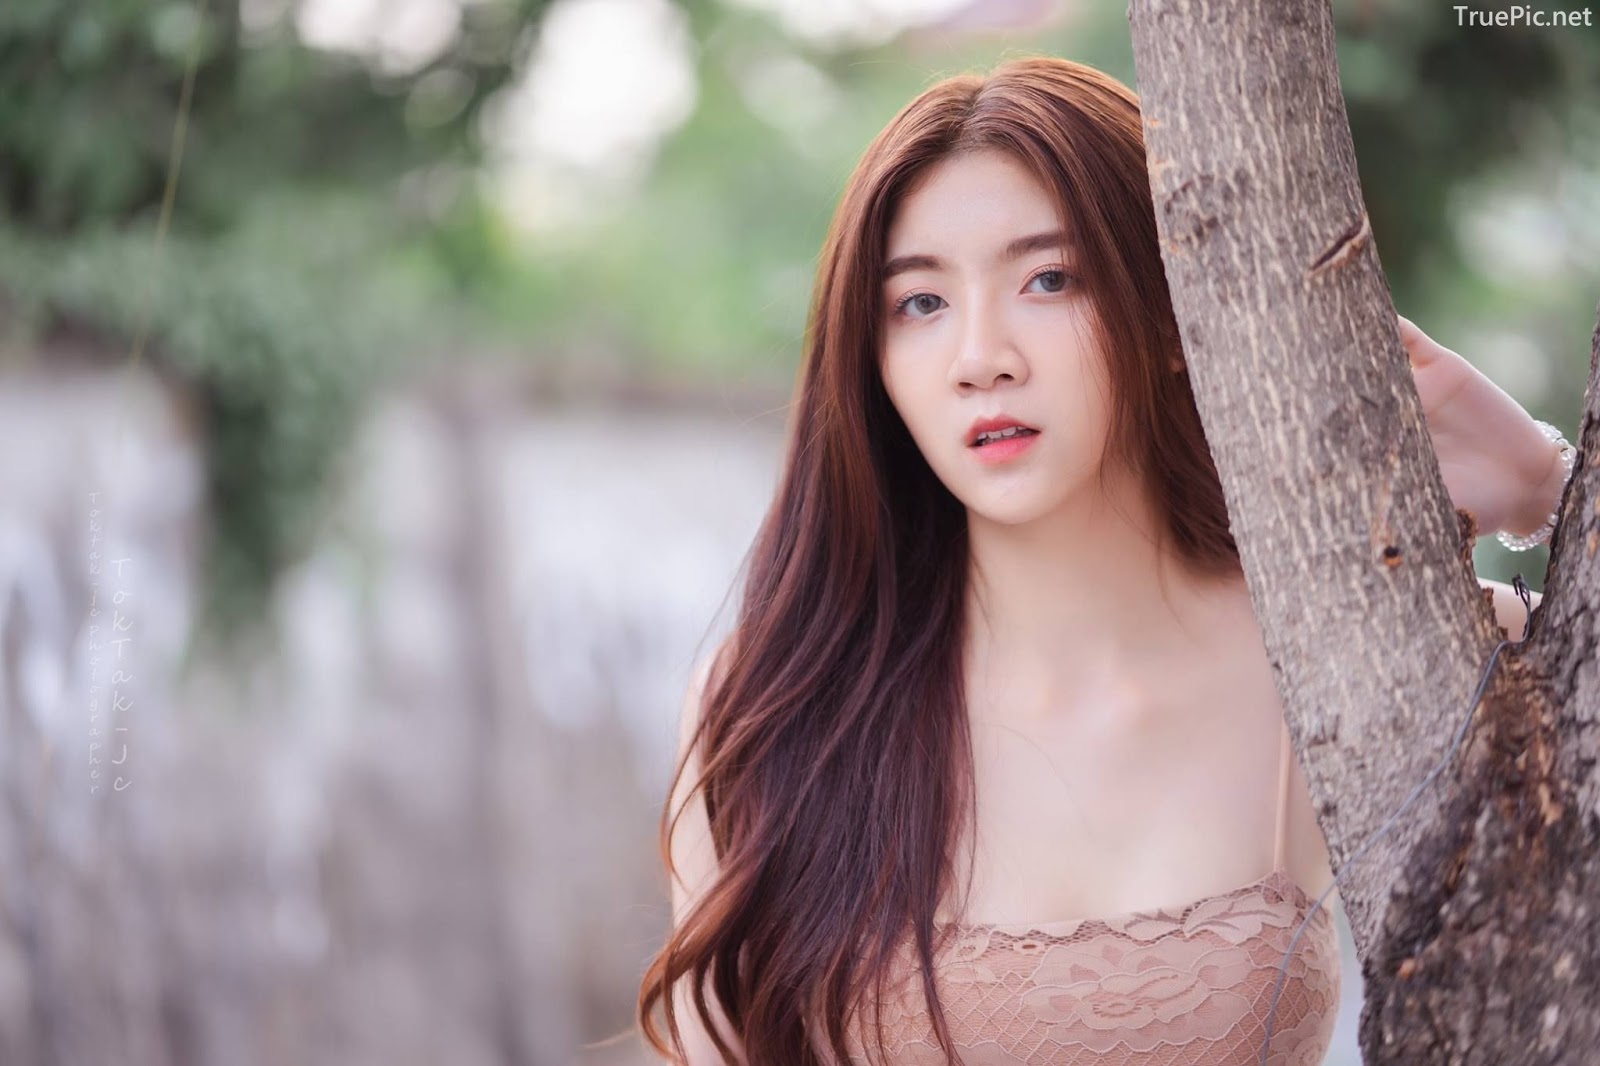 Thailand angel model Sasi Ngiunwan - Beauty portrait photoshoot - Picture 14